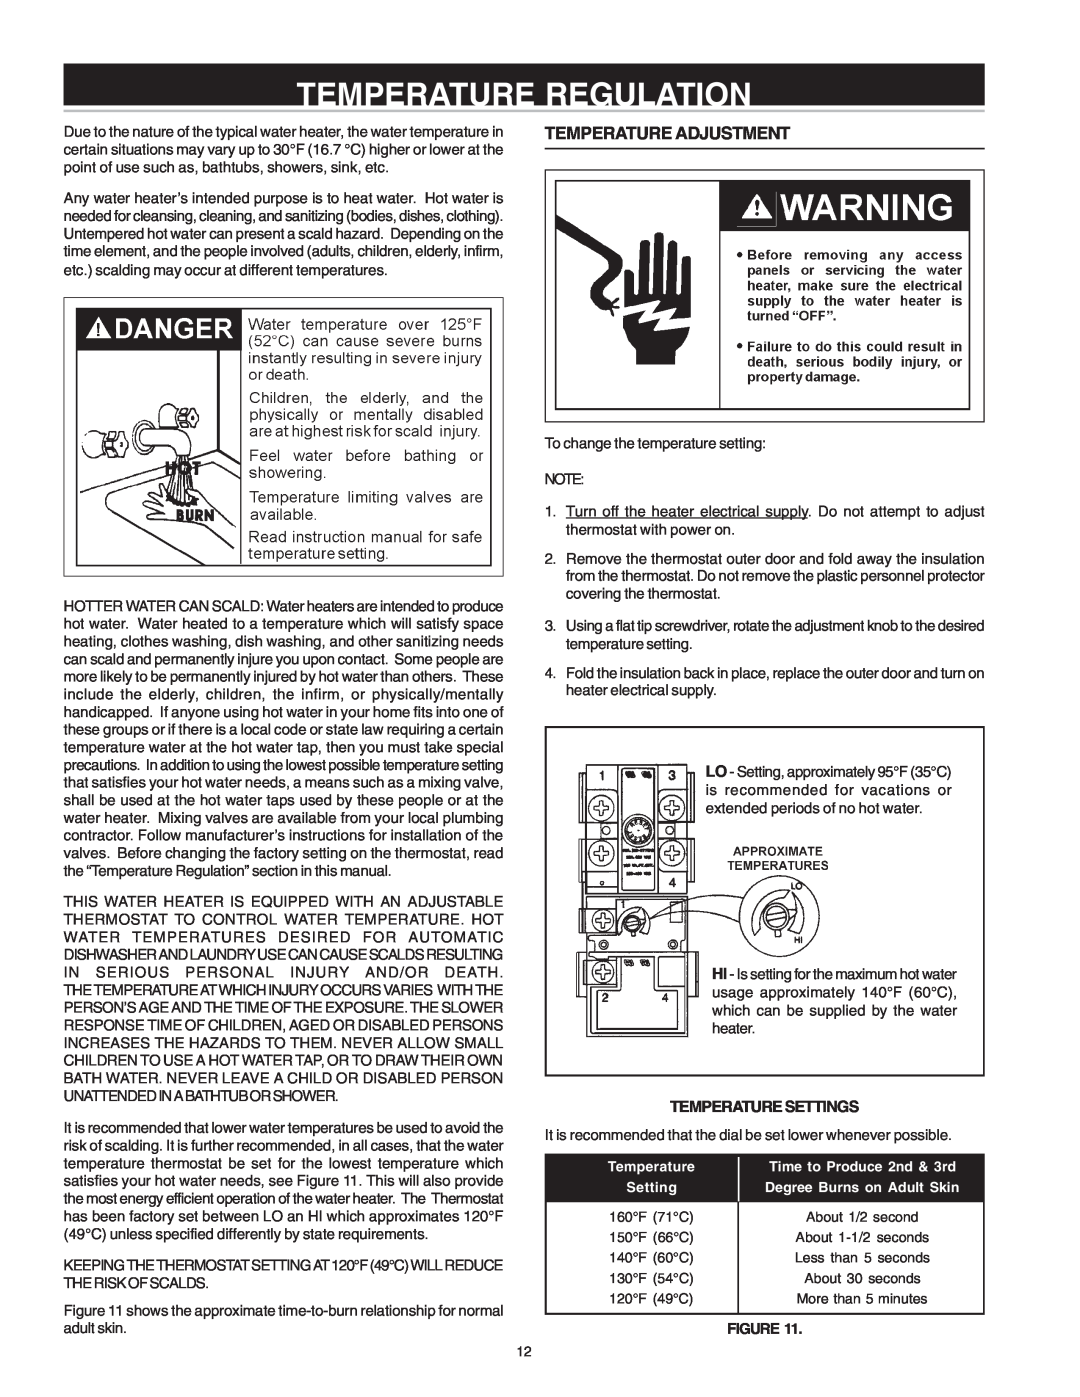 Reliance Water Heaters 184735-000 instruction manual Temperature Regulation, Temperature Adjustment, Temperature Settings 